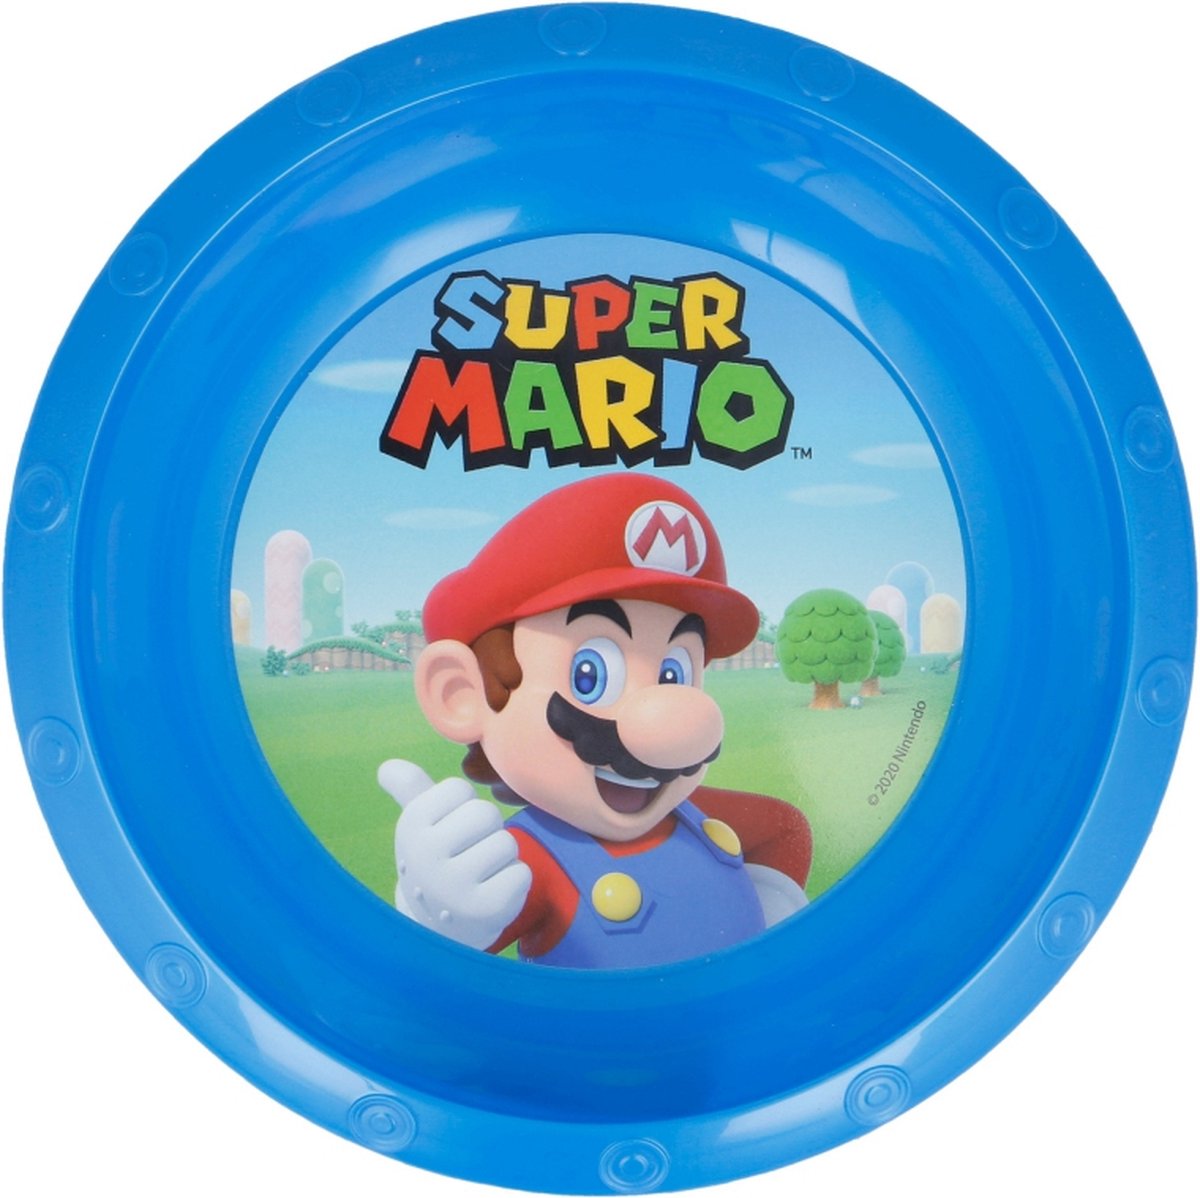 Super Mario Plastic schaaltje 16,7 cm